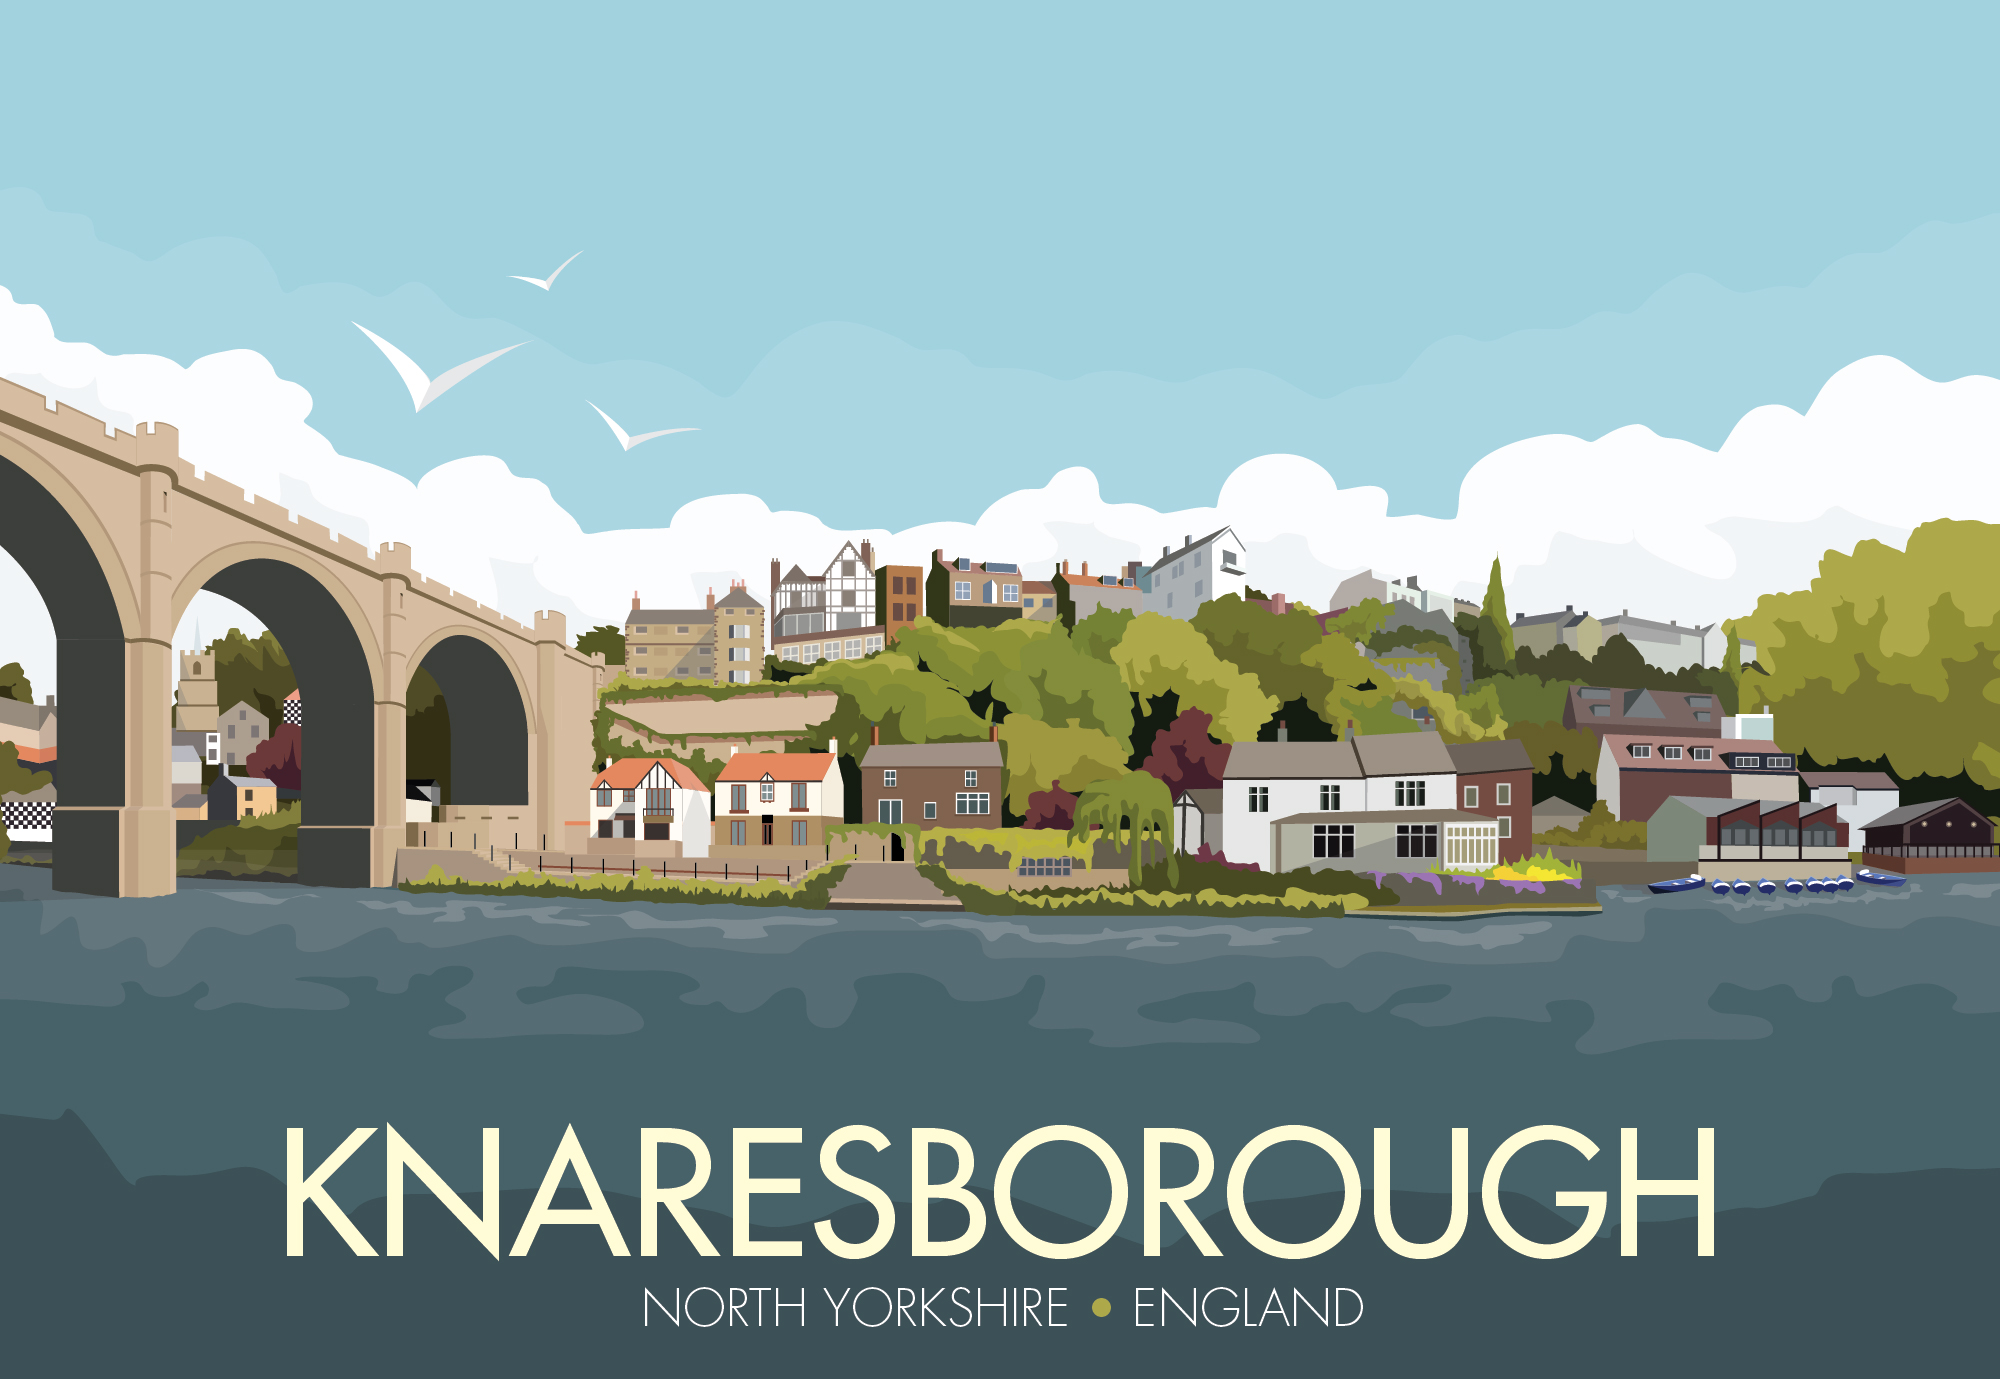 Amazing Knaresborough Pictures & Backgrounds